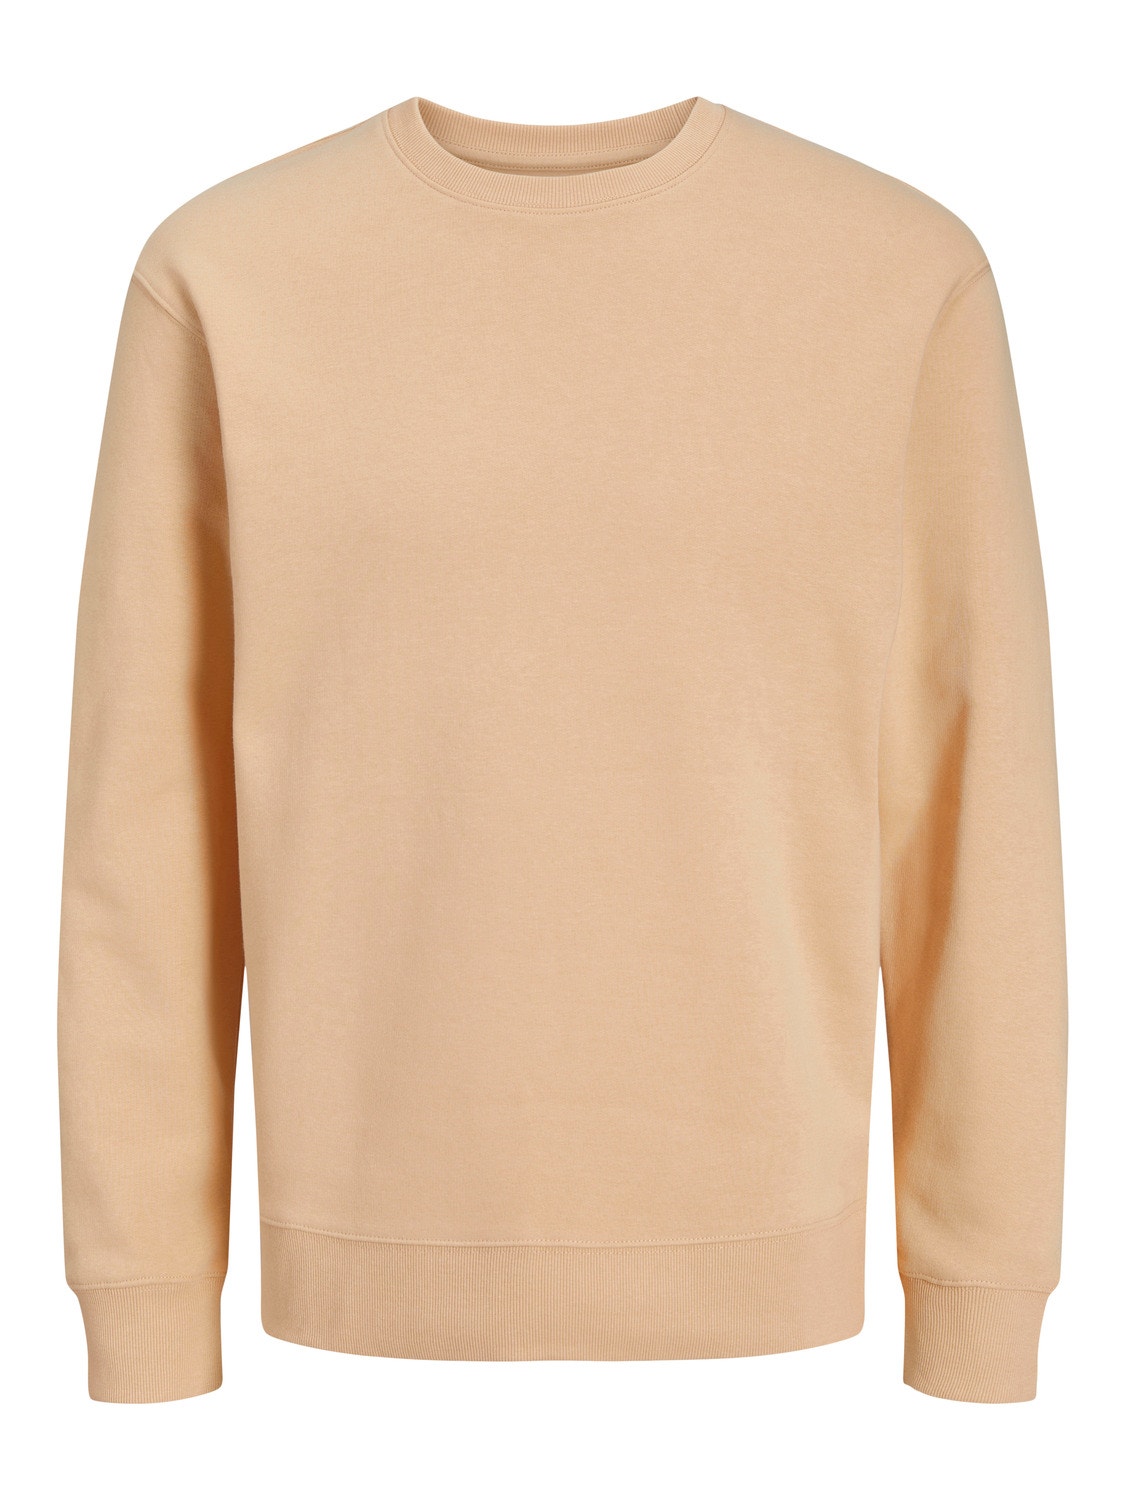 Jack & Jones Plain Crewn Neck Sweatshirt -Apricot Ice  - 12208182